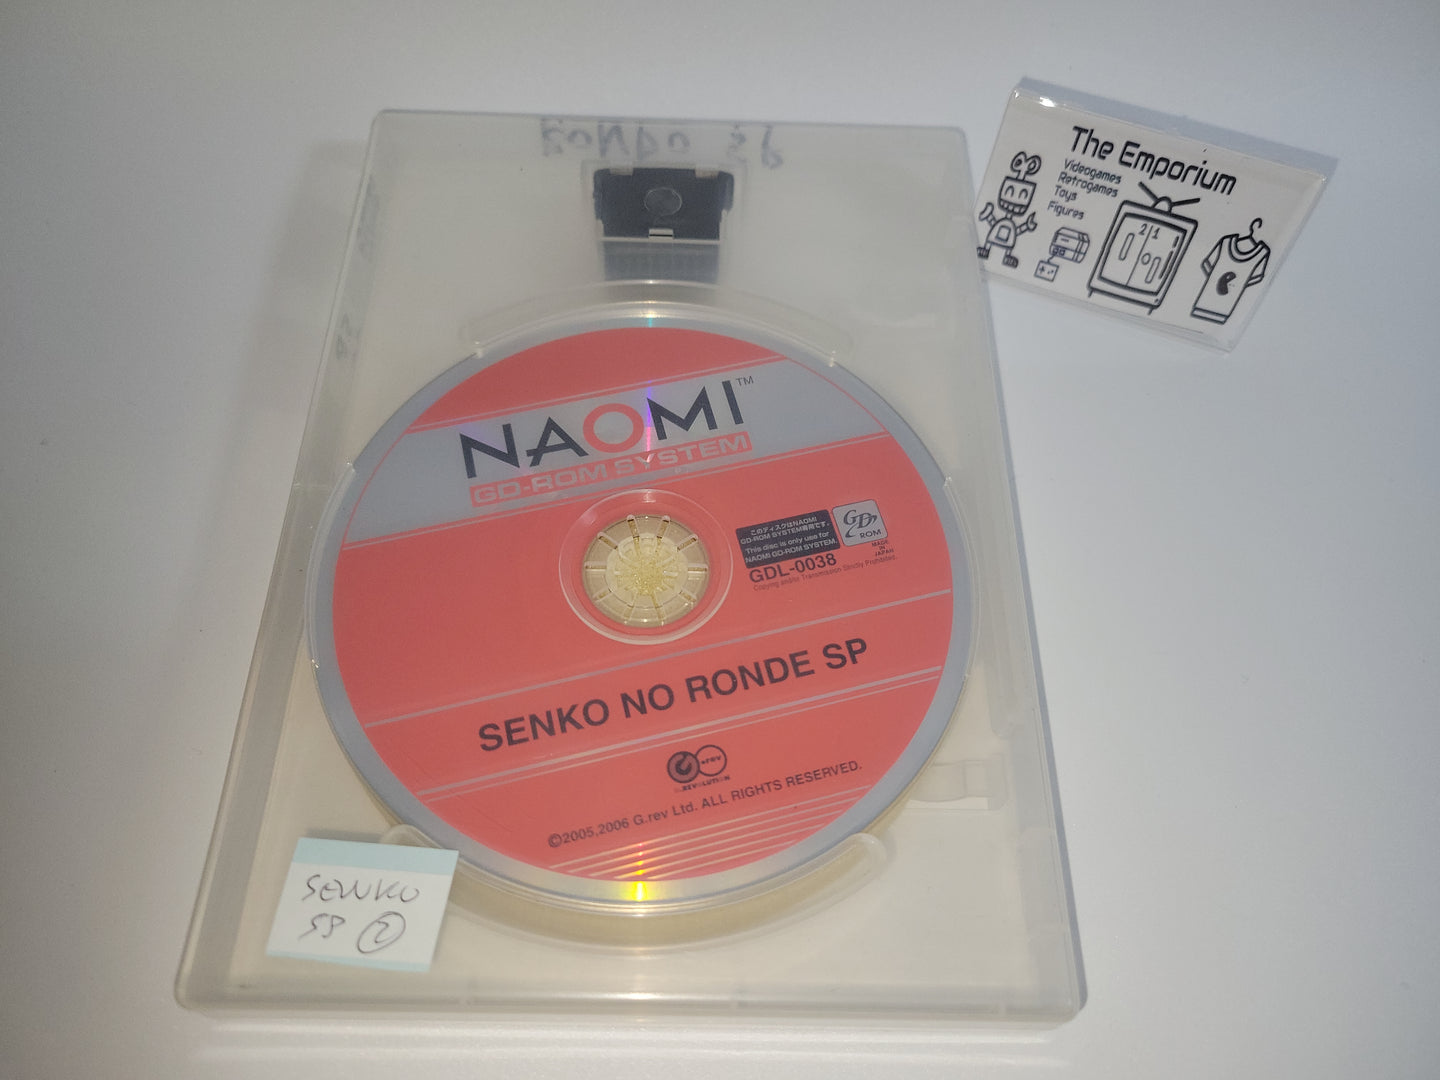 Senko no Ronde SP (Gd-Rom + Dongle) - Arcade Pcb Printed Circuit Board